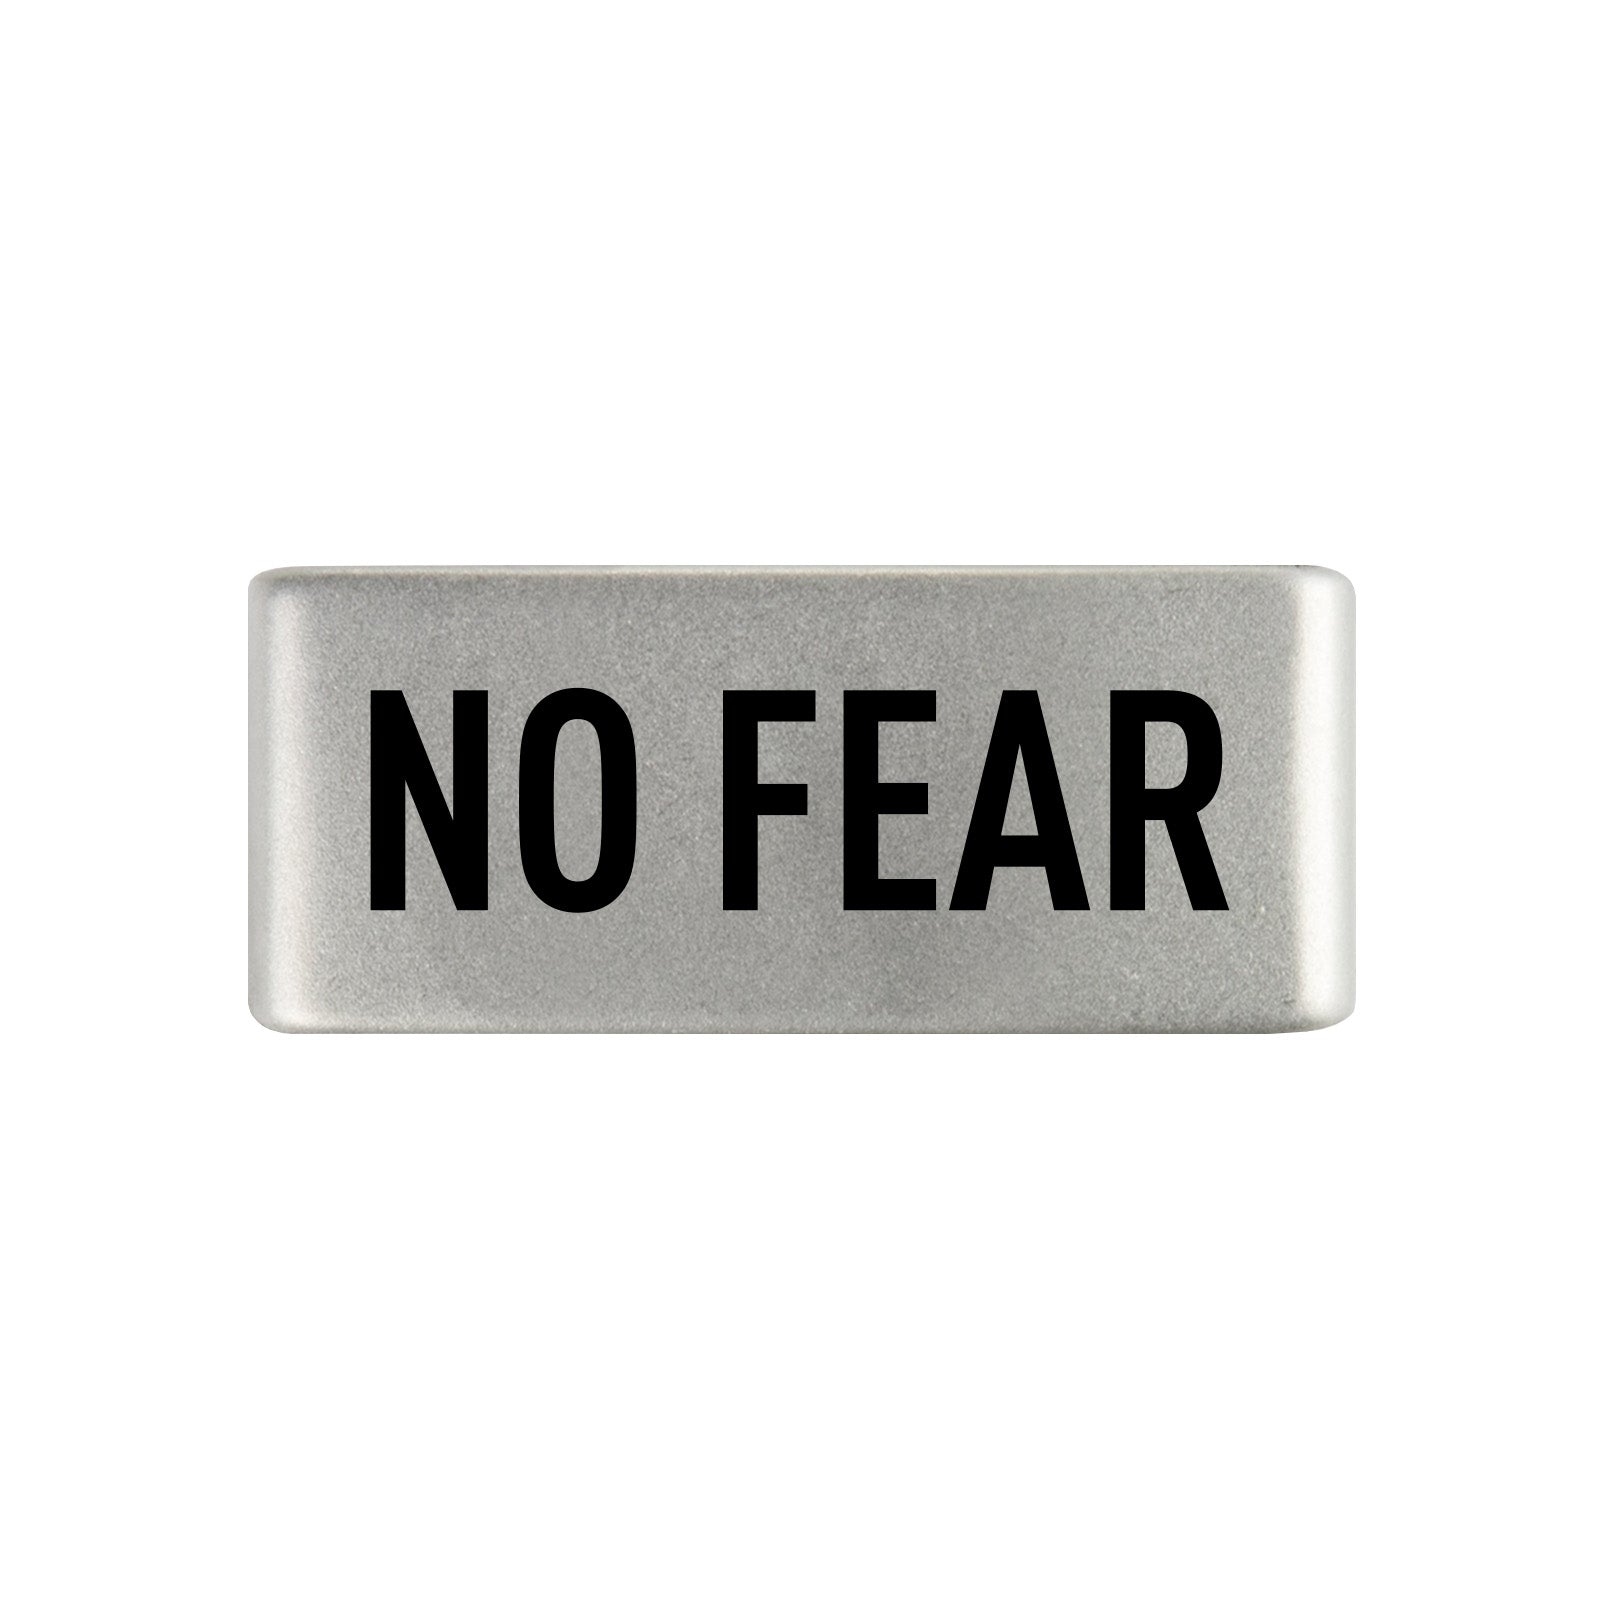 No Fear Badge Badge 13mm - ROAD iD